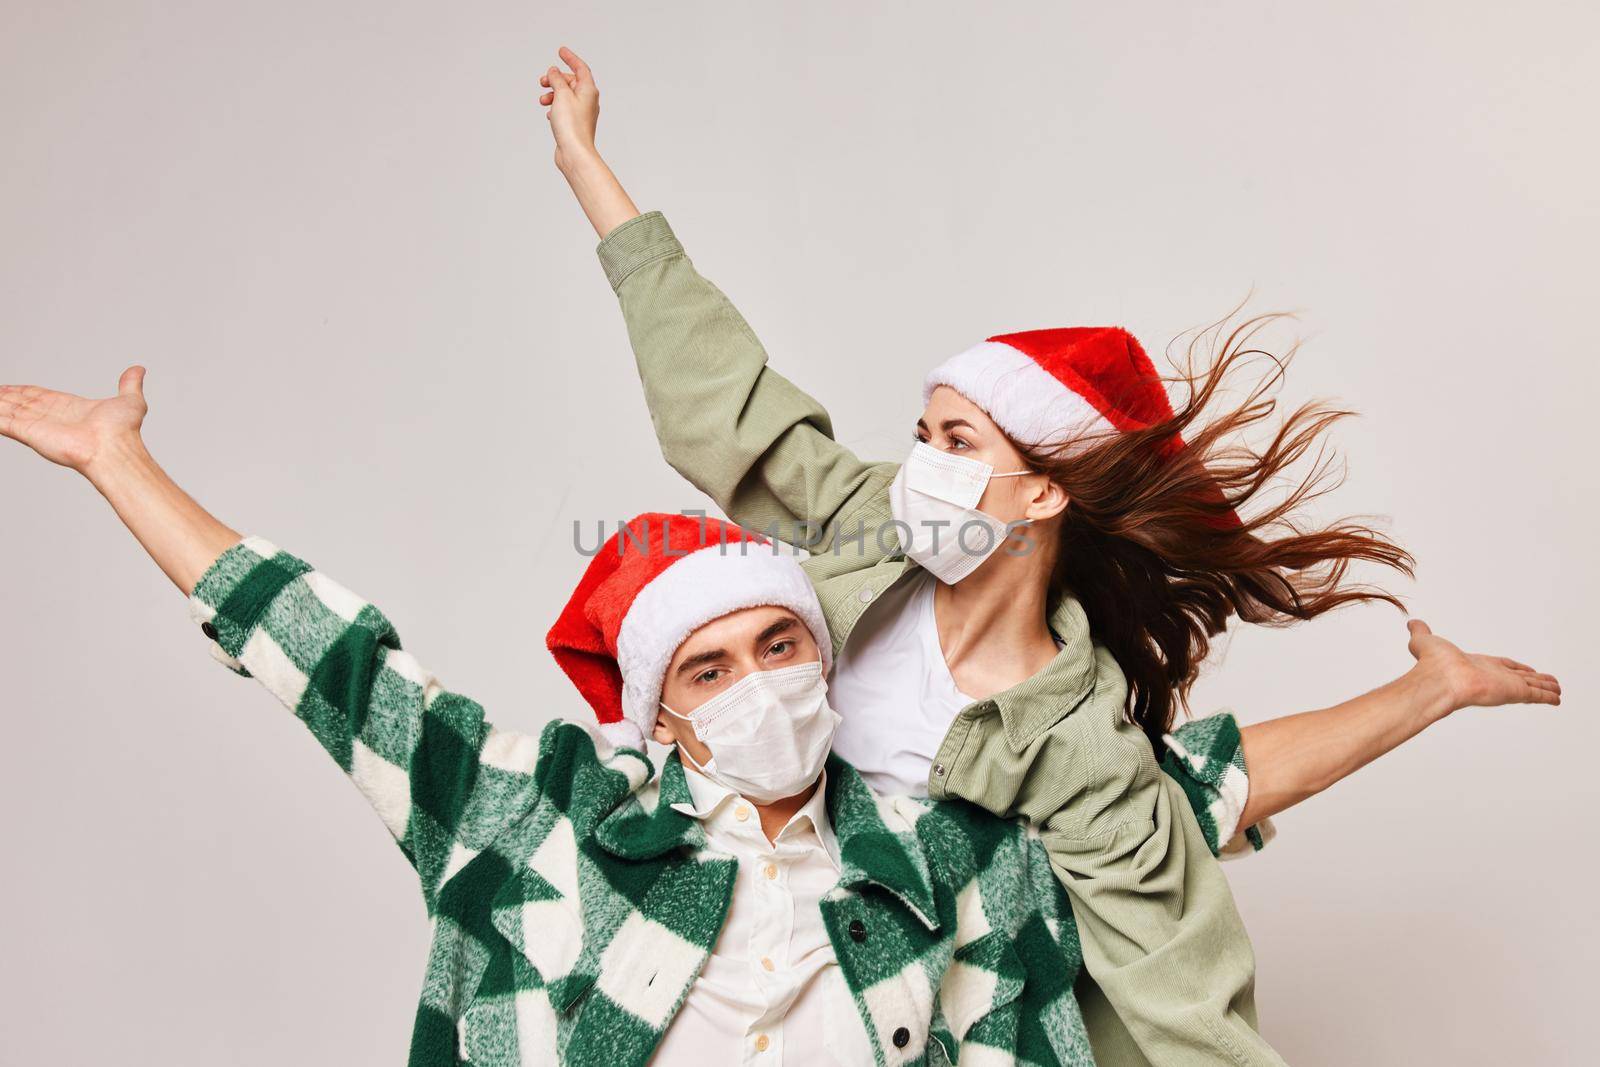 Christmas mood man and woman fun holiday hat medical mask. High quality photo